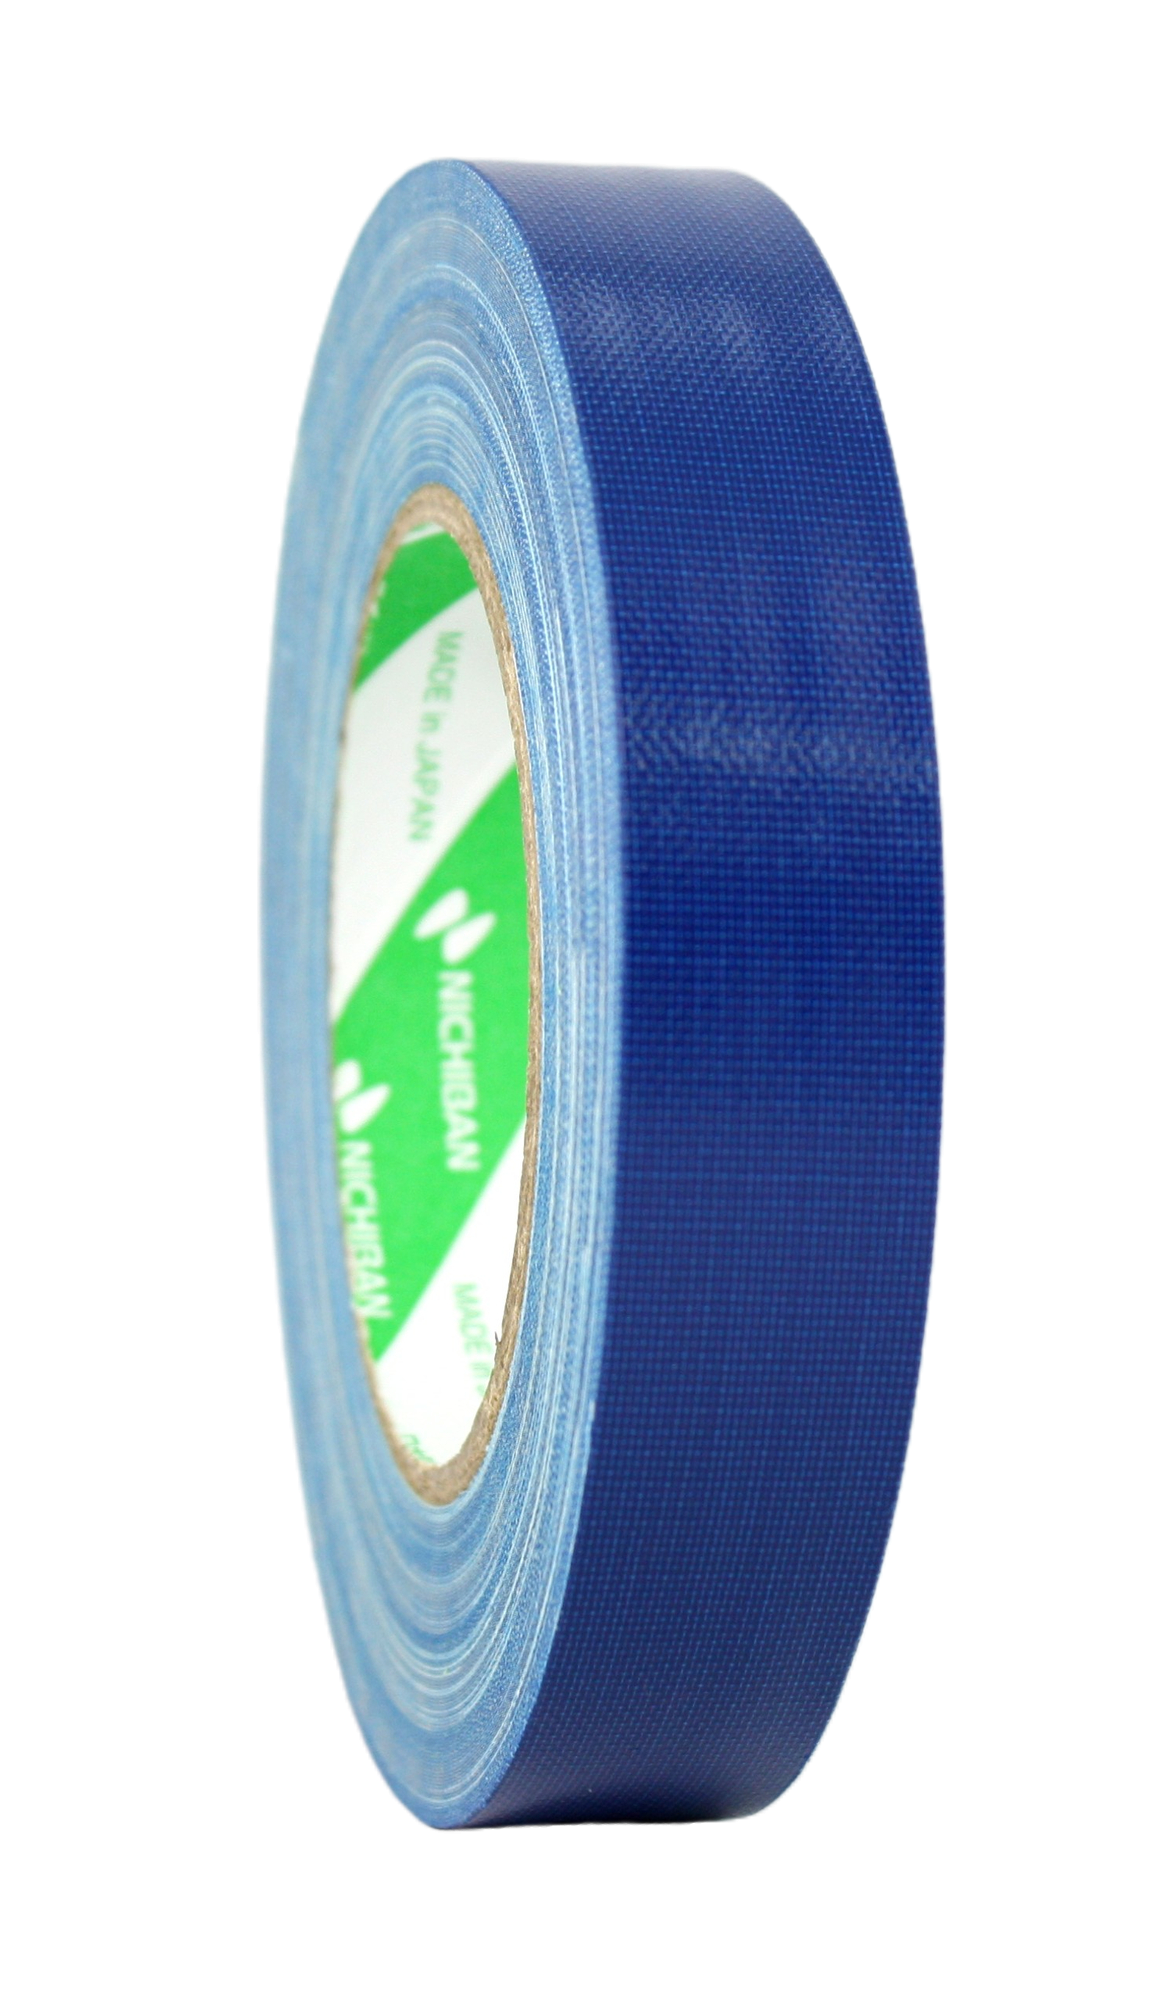 Nichiban 1" Gaffer Tape, Blue, side view